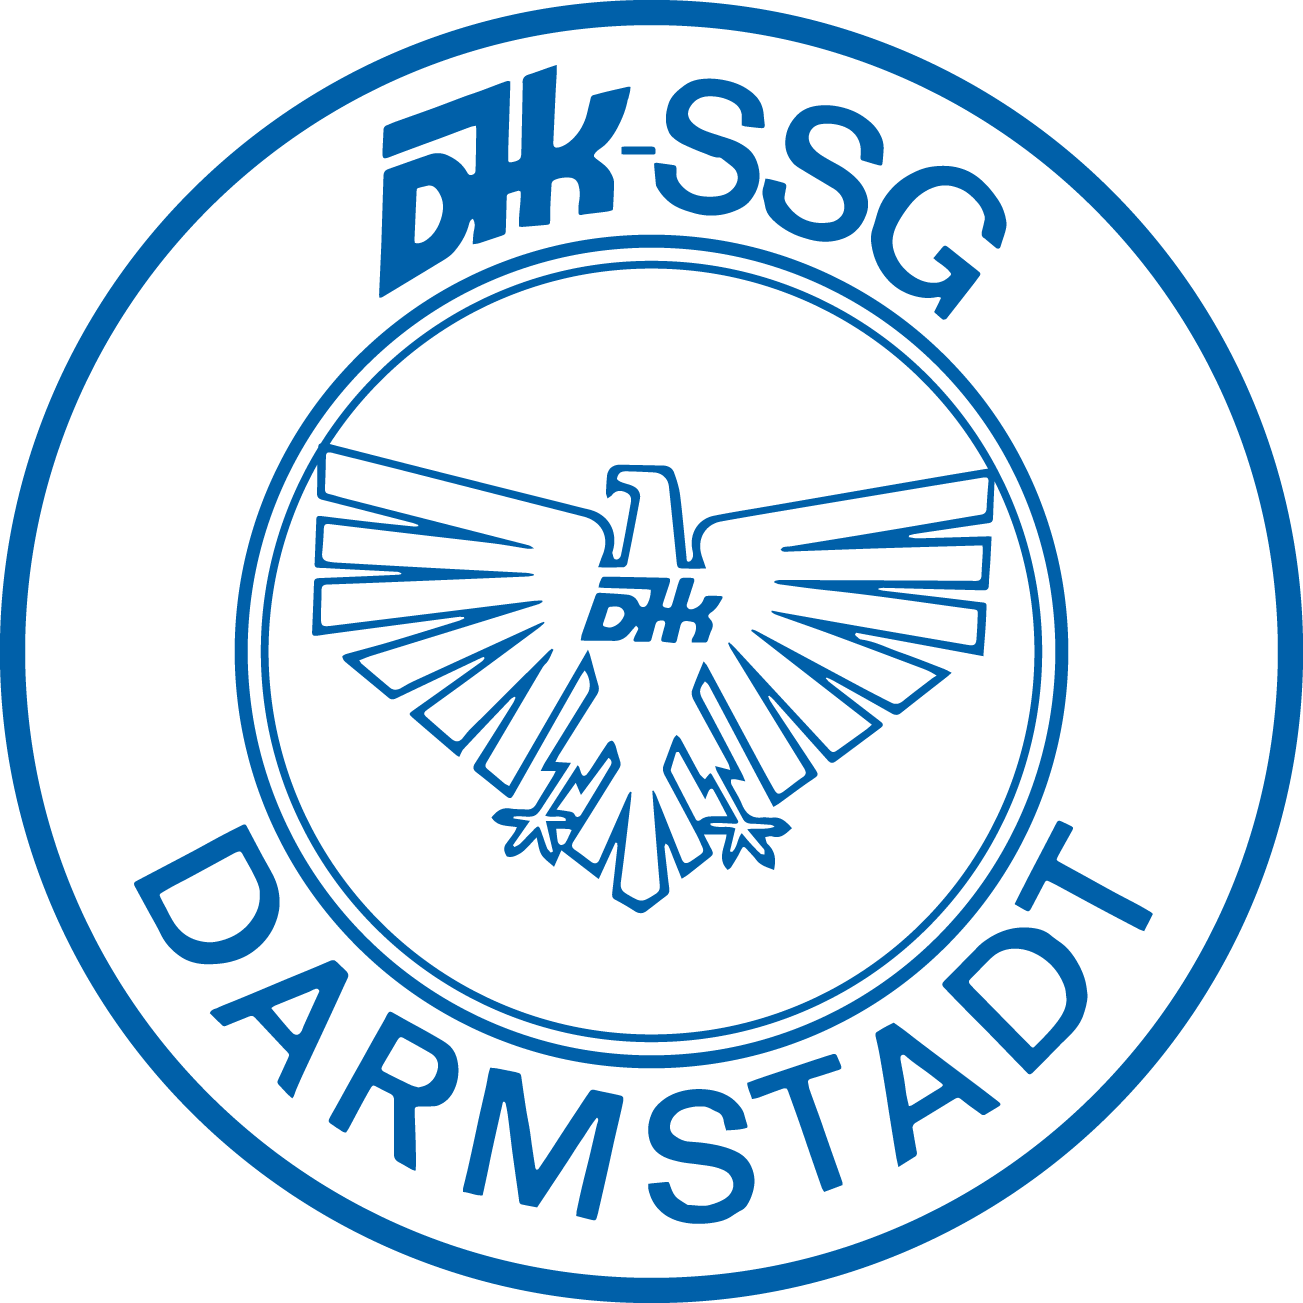 DJK-SSG Darmstadt Title Image